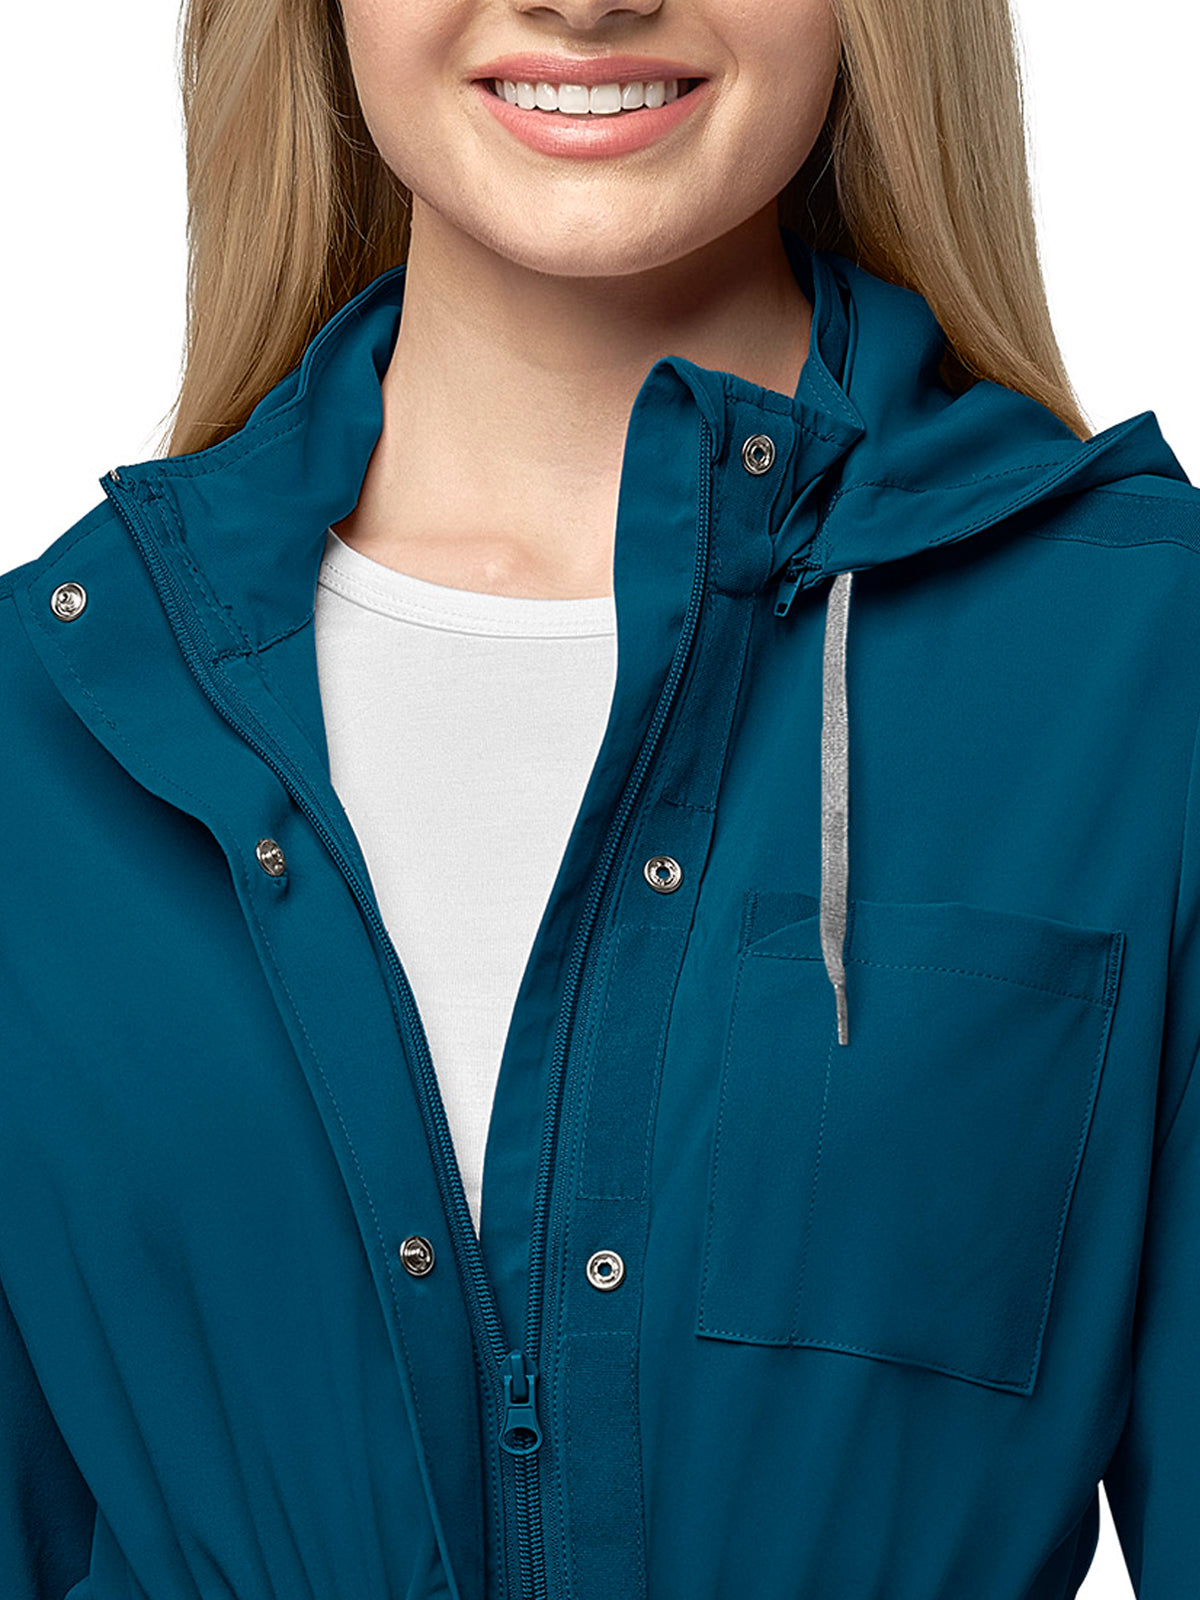 Women's Convertible Hood Jacket - 8134 - Caribbean